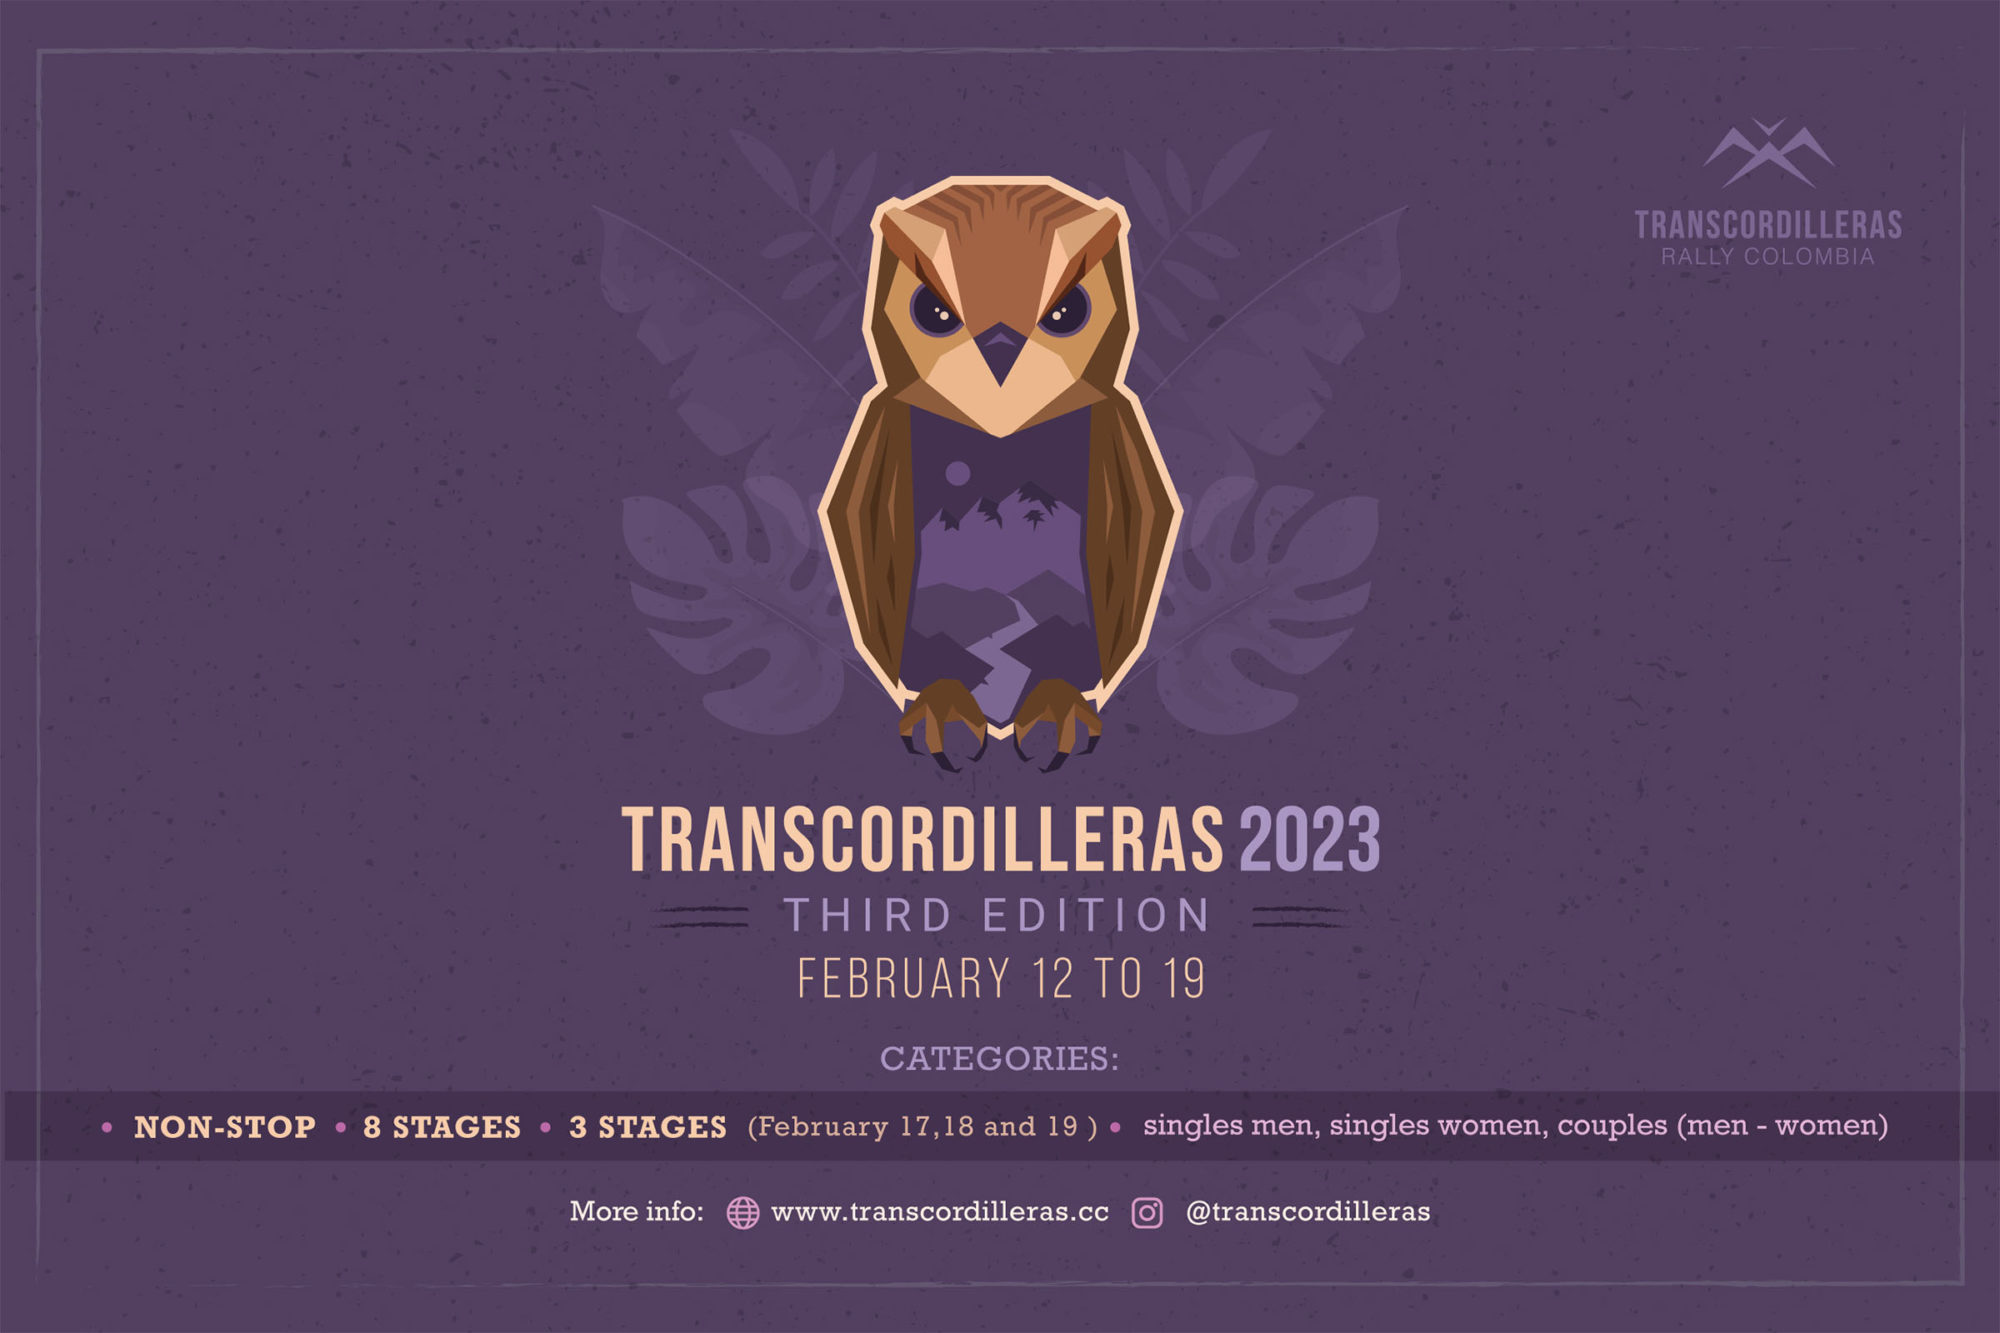 The Transcordilleras 2023